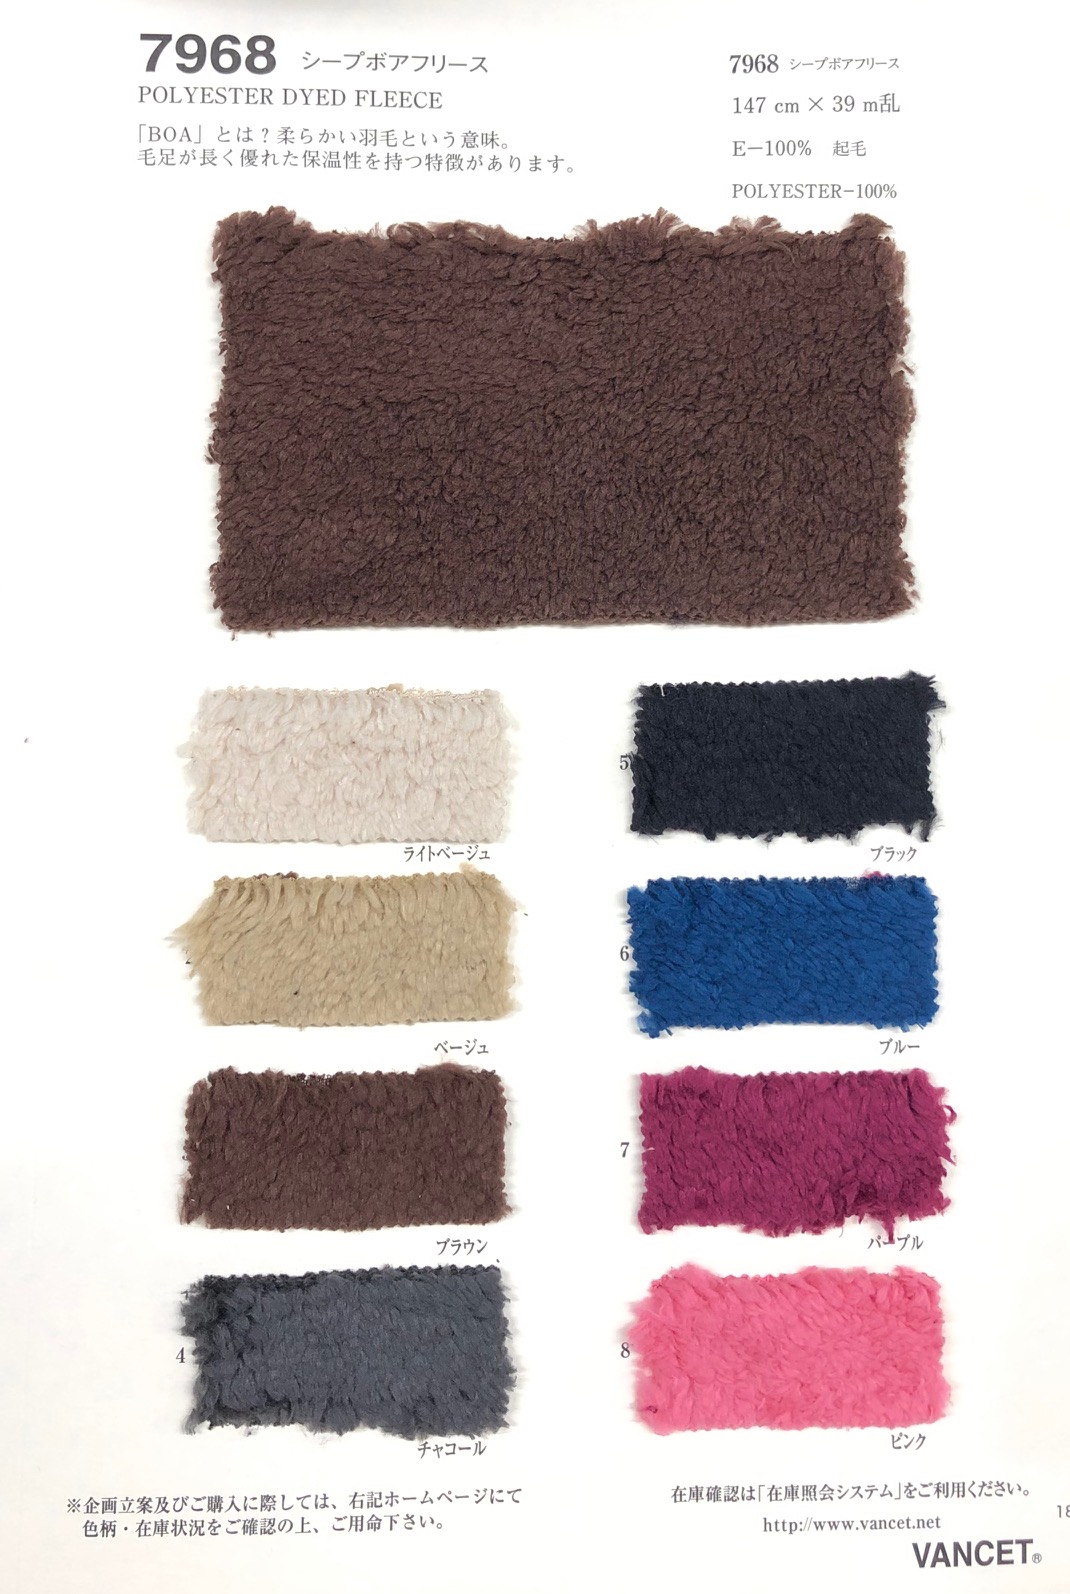 7968 Sheep Bore Fleece[Textile / Fabric] VANCET